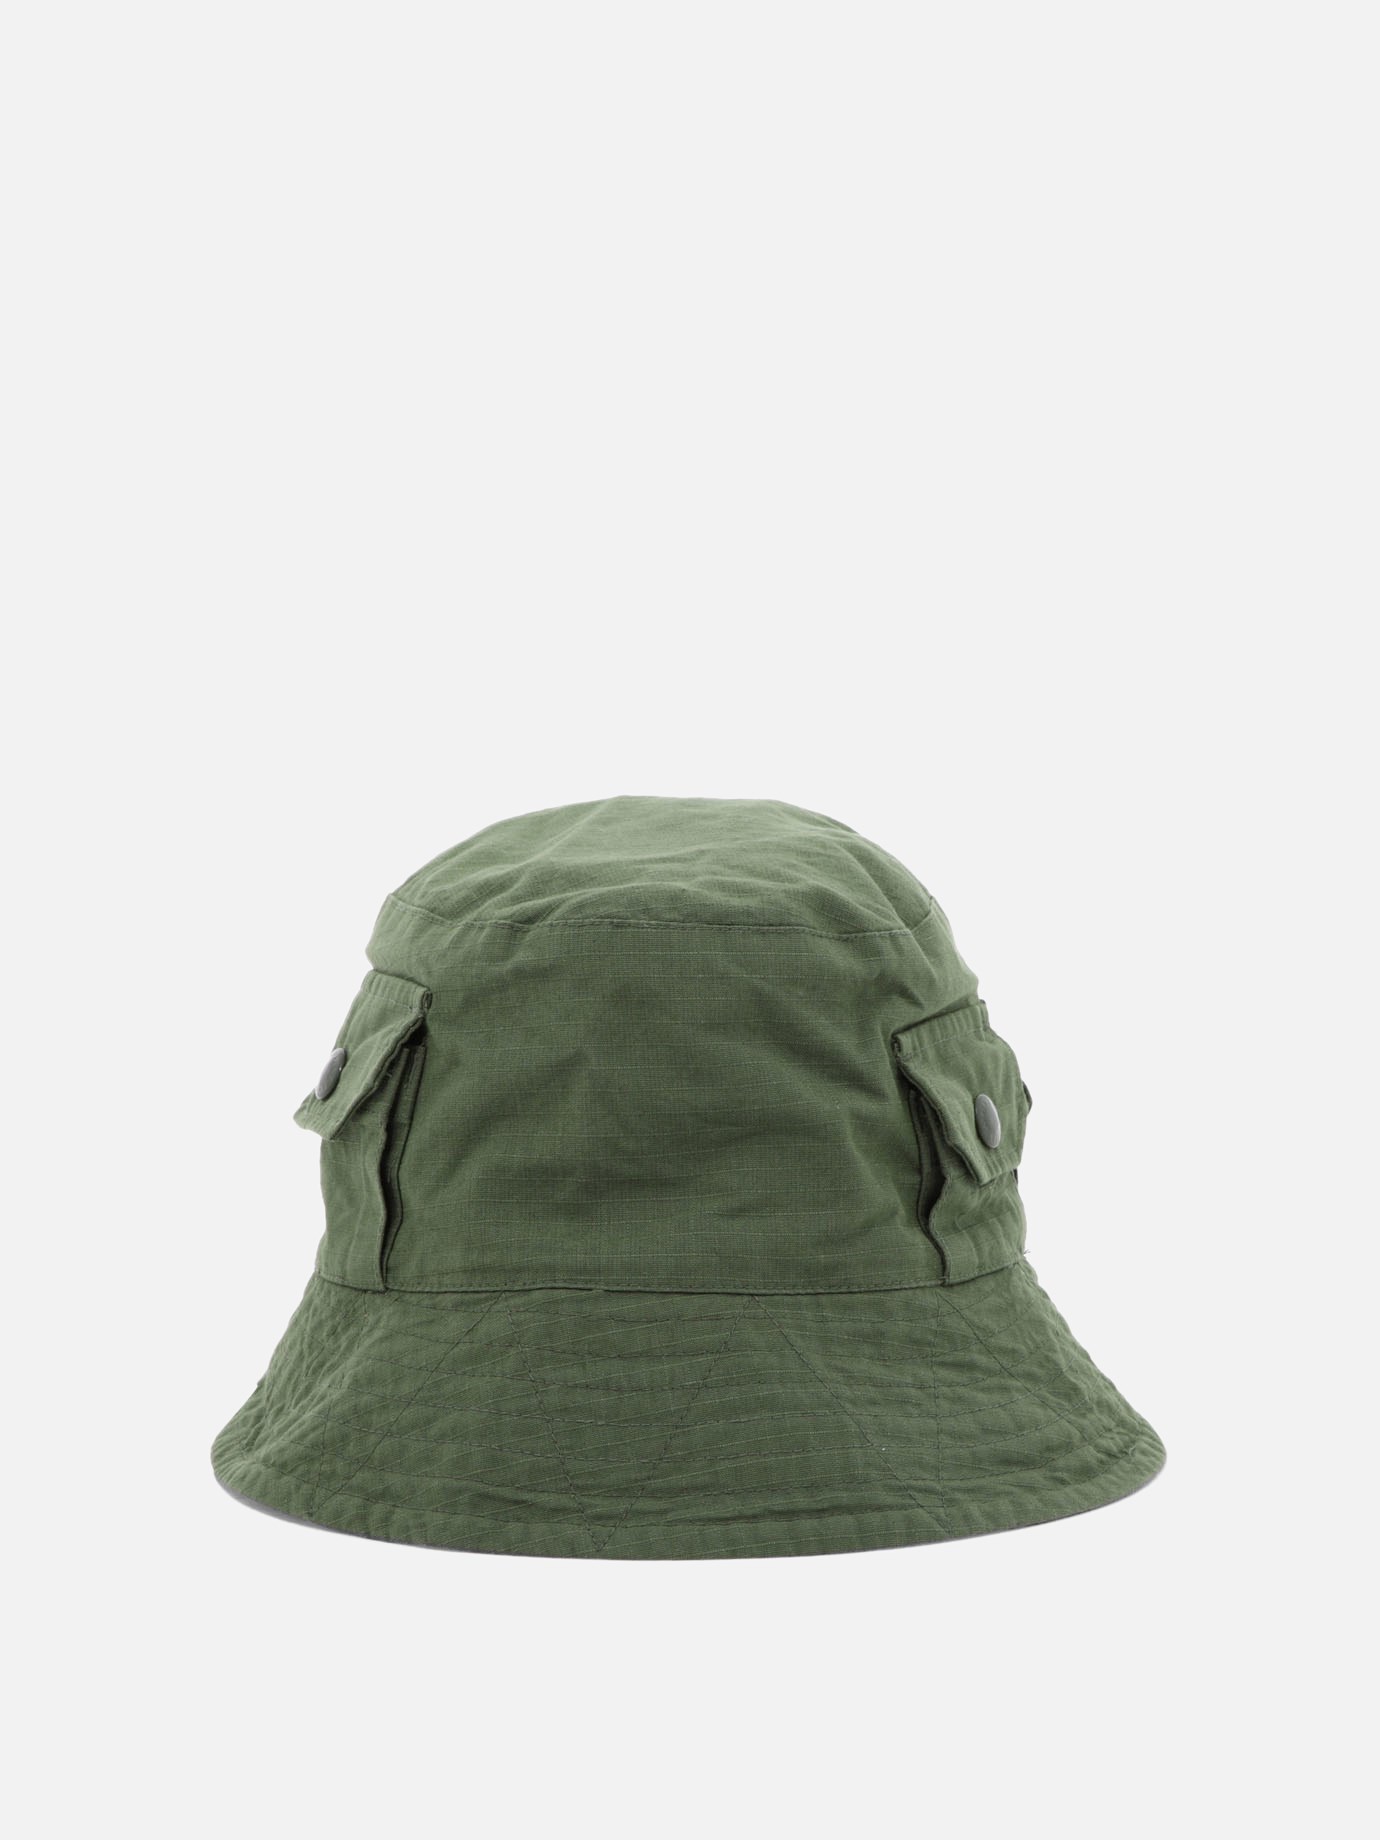  Explorer  bucket hatby Engineered Garments - 4